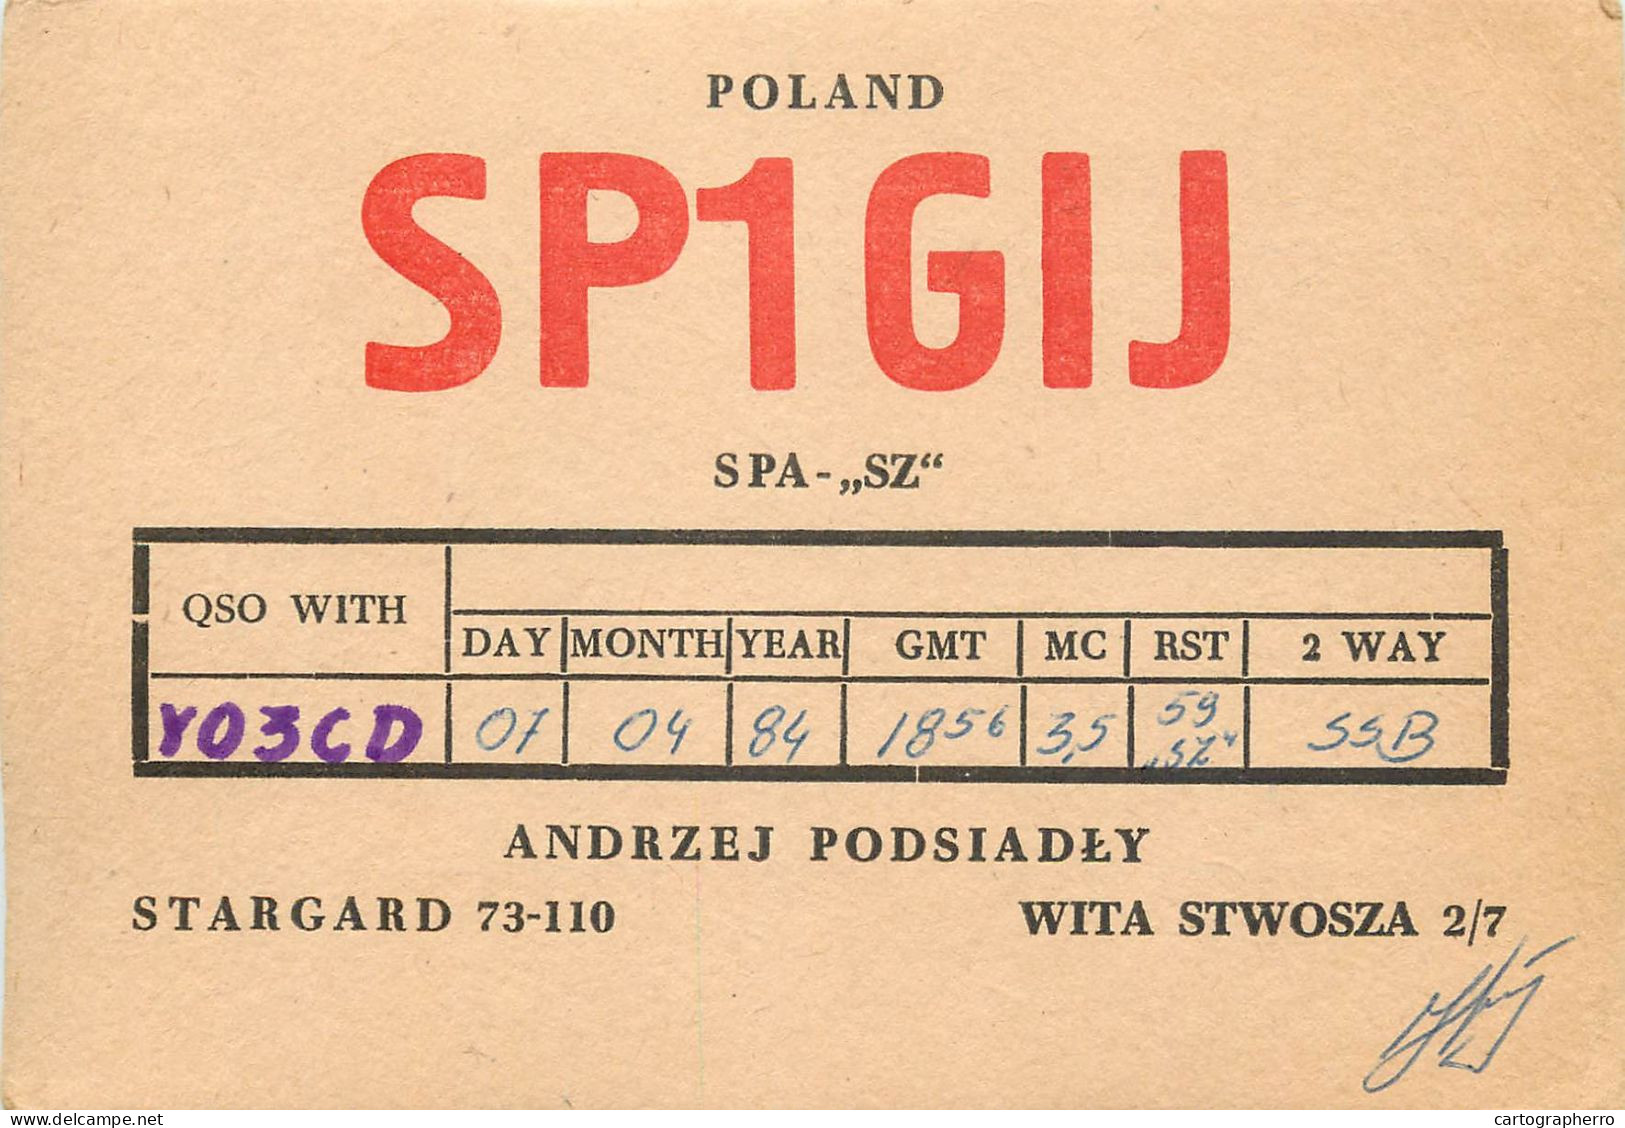 Polish Amateur Radio Station QSL Card Poland SP1GIJ - Amateurfunk